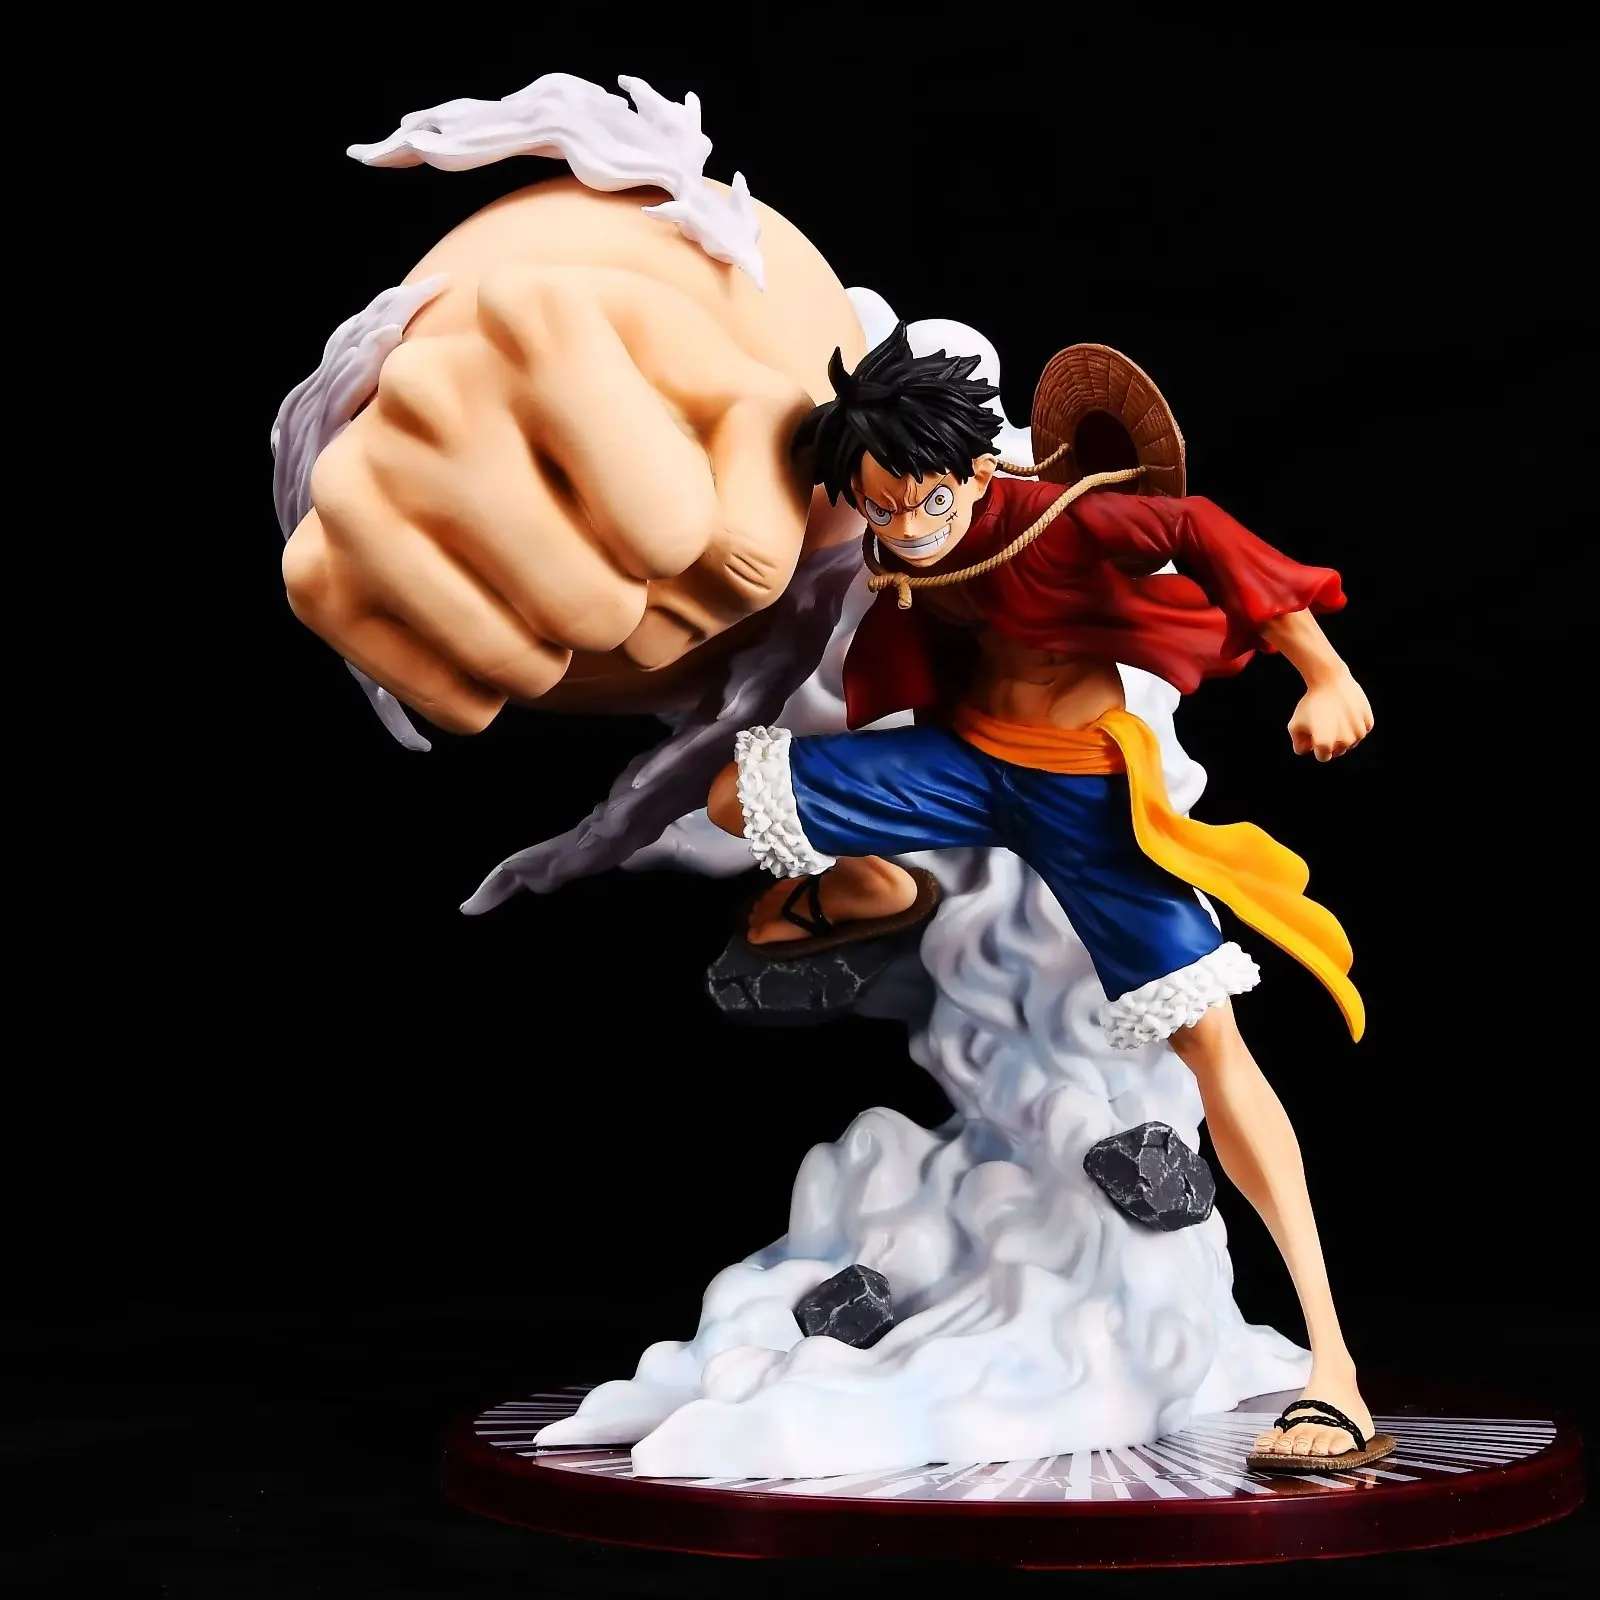 

25cm One Piece Figure GK Luffy Bound Man Gear 3 Battle Form Action Figure Monkey D Luffy Popmax Resonance Figurine Model Toys